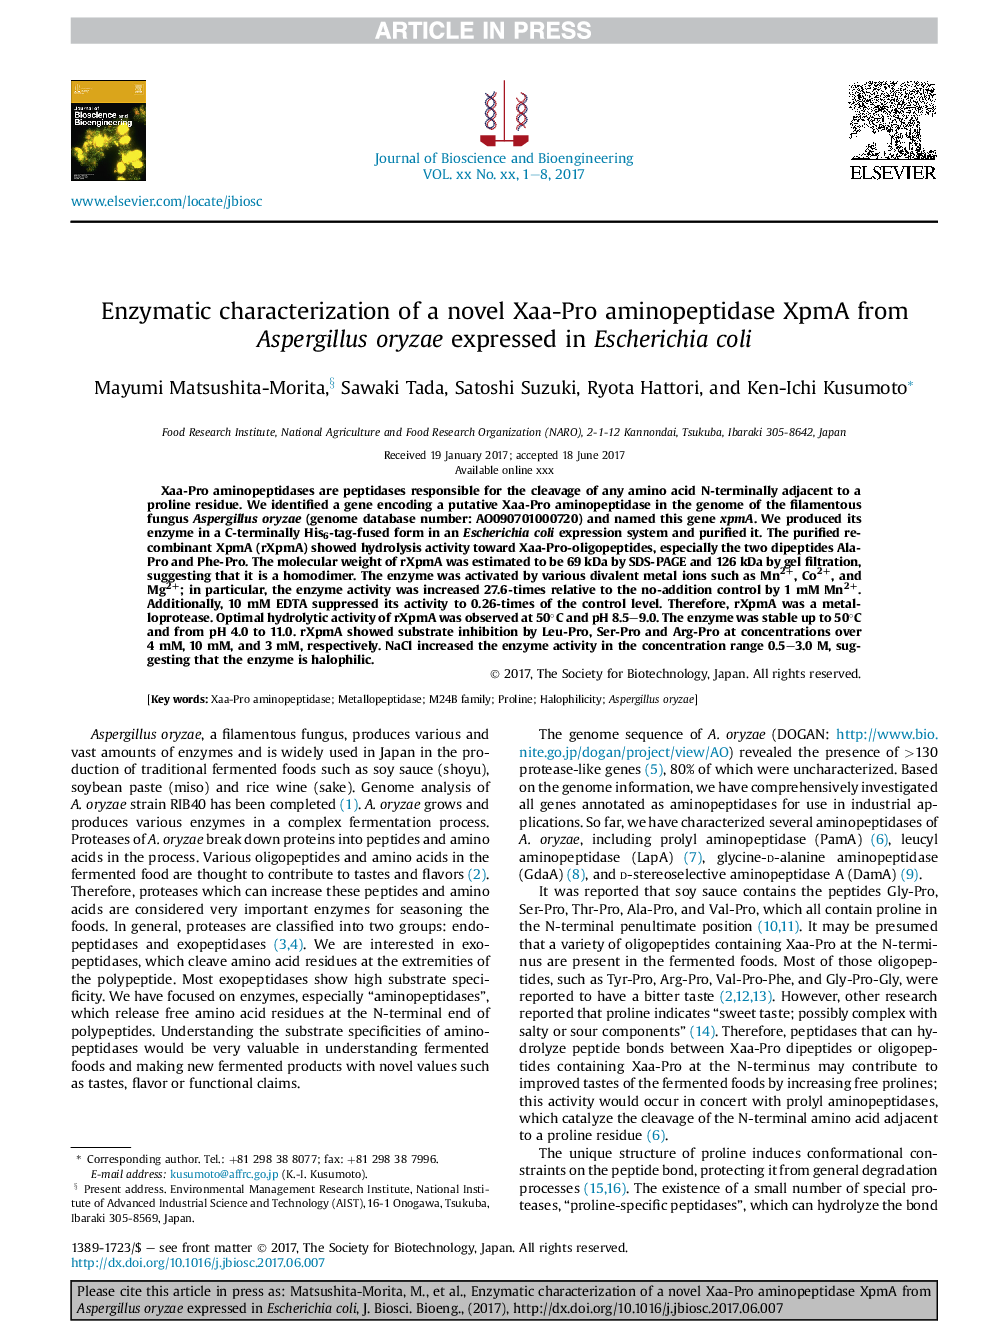 Enzymatic characterization of a novel Xaa-Pro aminopeptidase XpmA from Aspergillus oryzae expressed in Escherichia coli